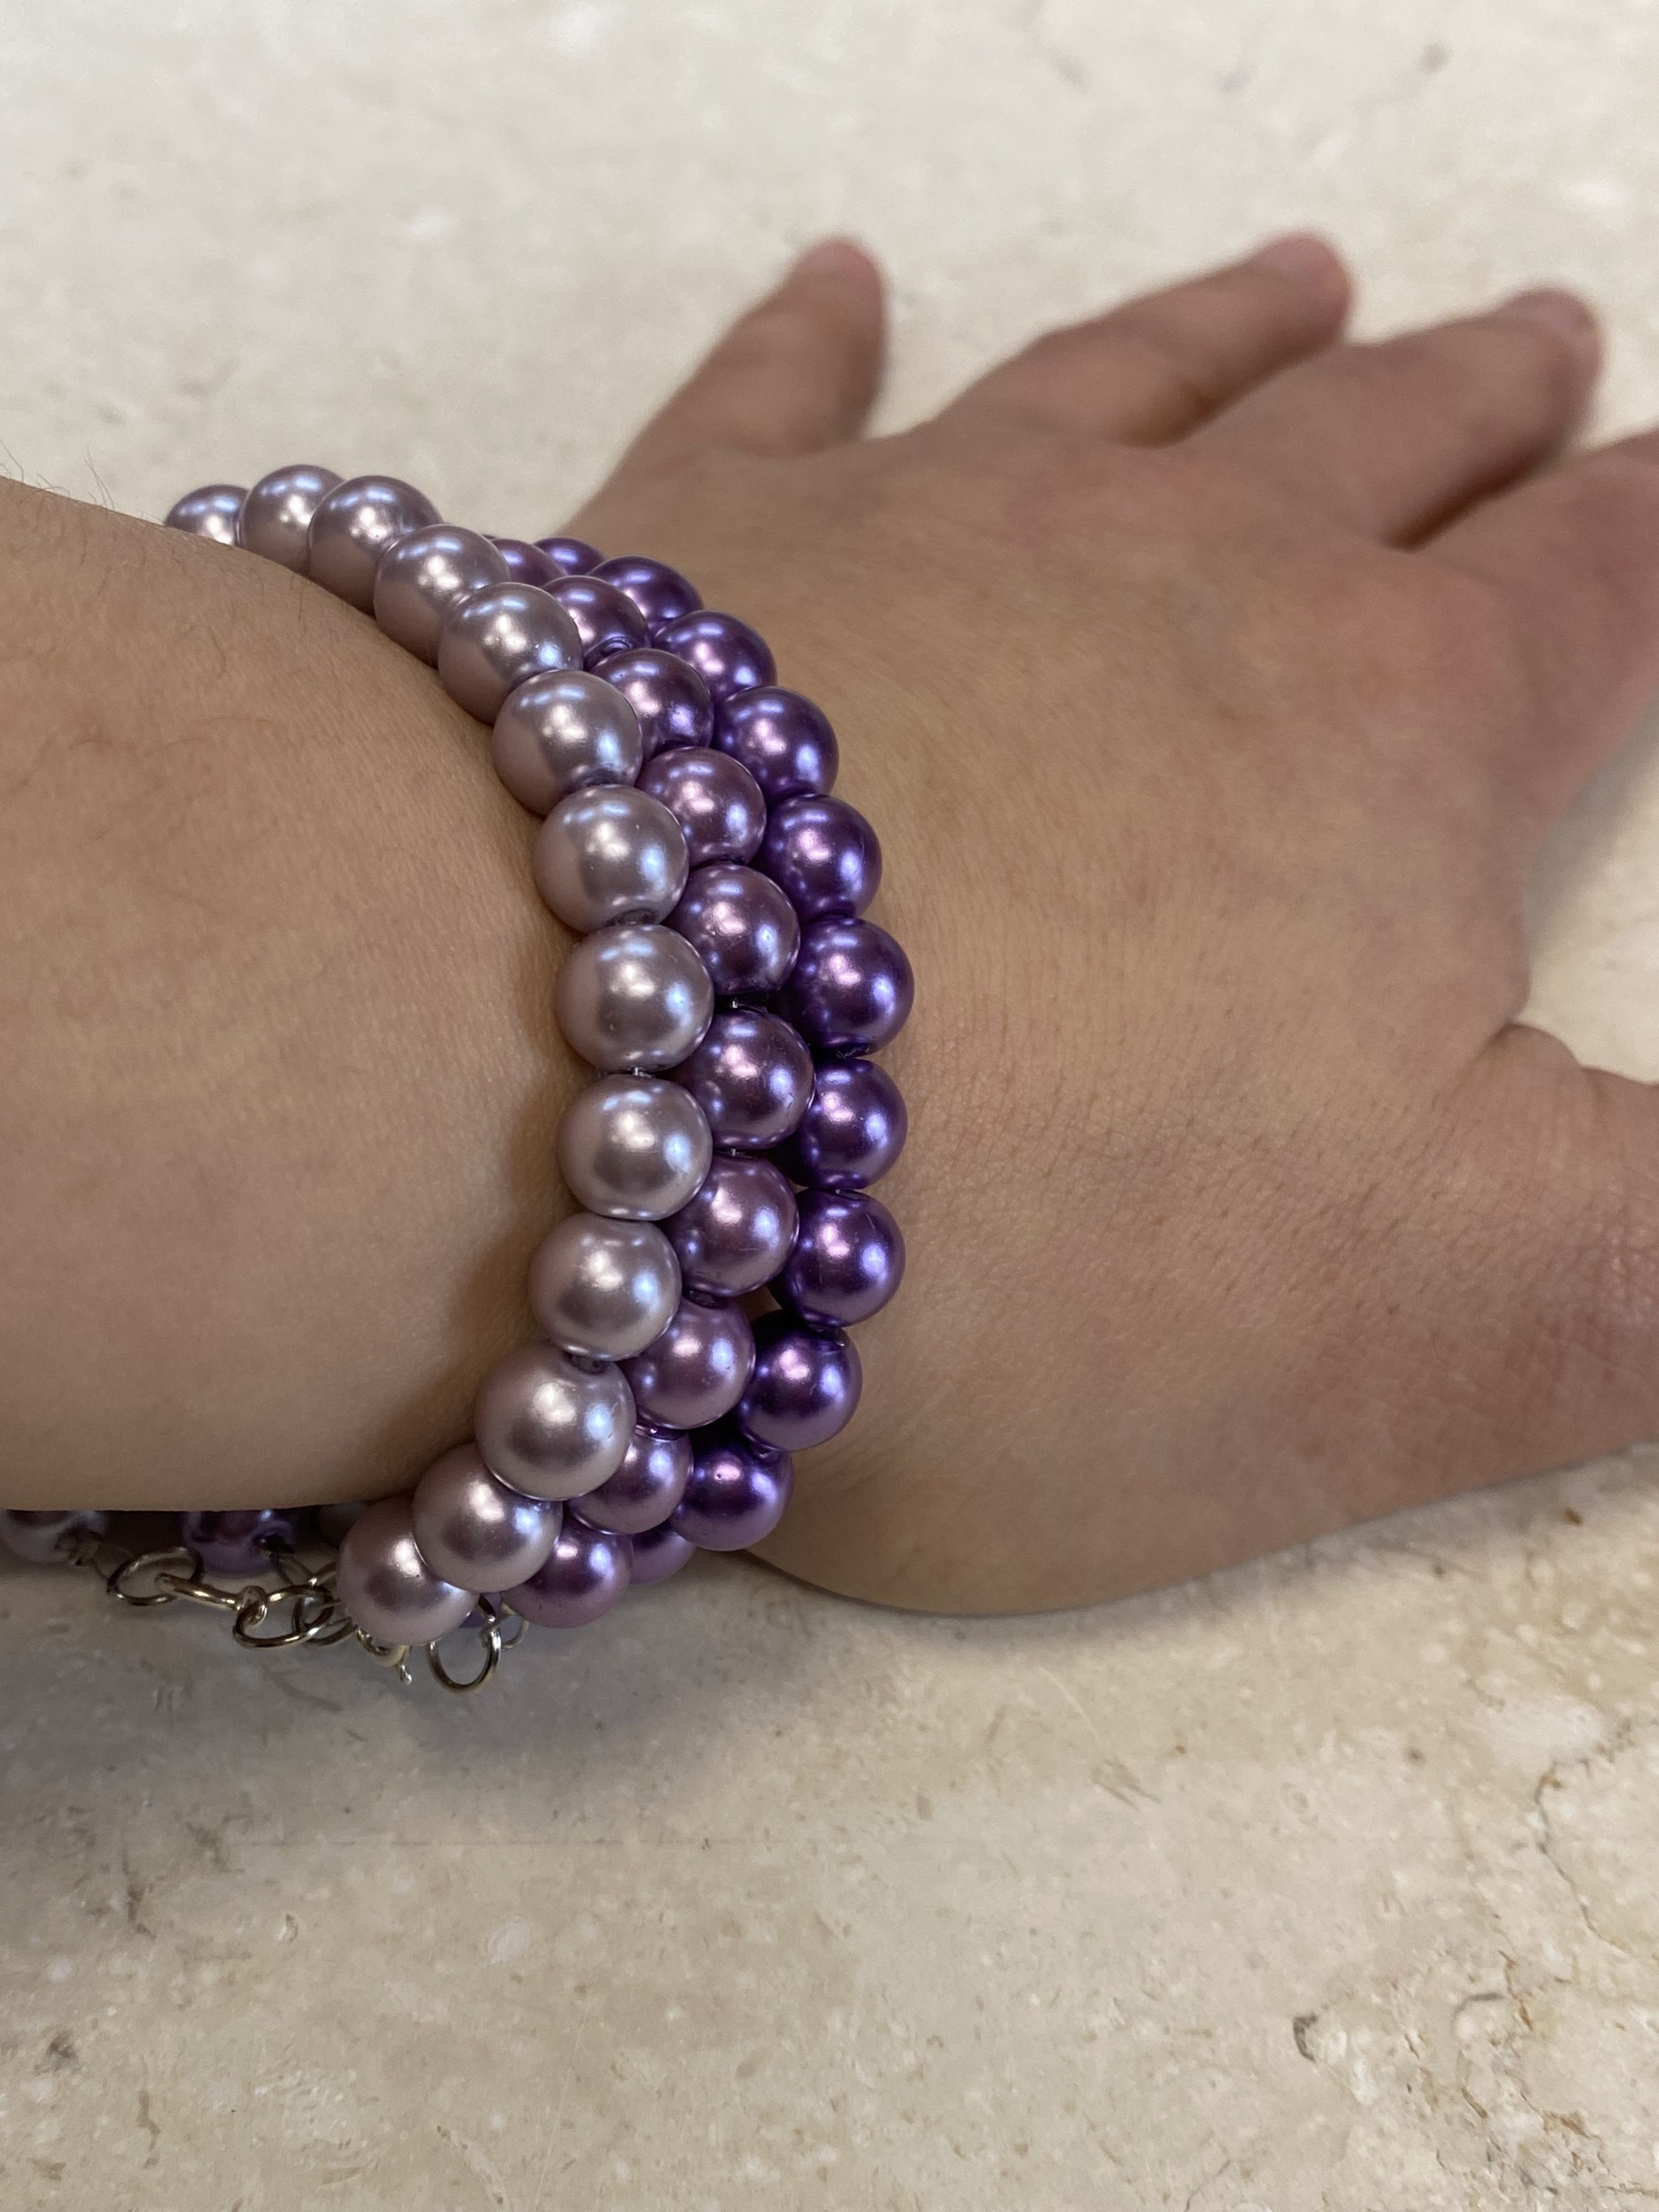 Set of 3 Stackable Faux Pearl Beaded Bracelet (Shades of Violet) - Stackable Faux Pearl Beaded Bracelet - Handmade Faux Pearl Bracelet